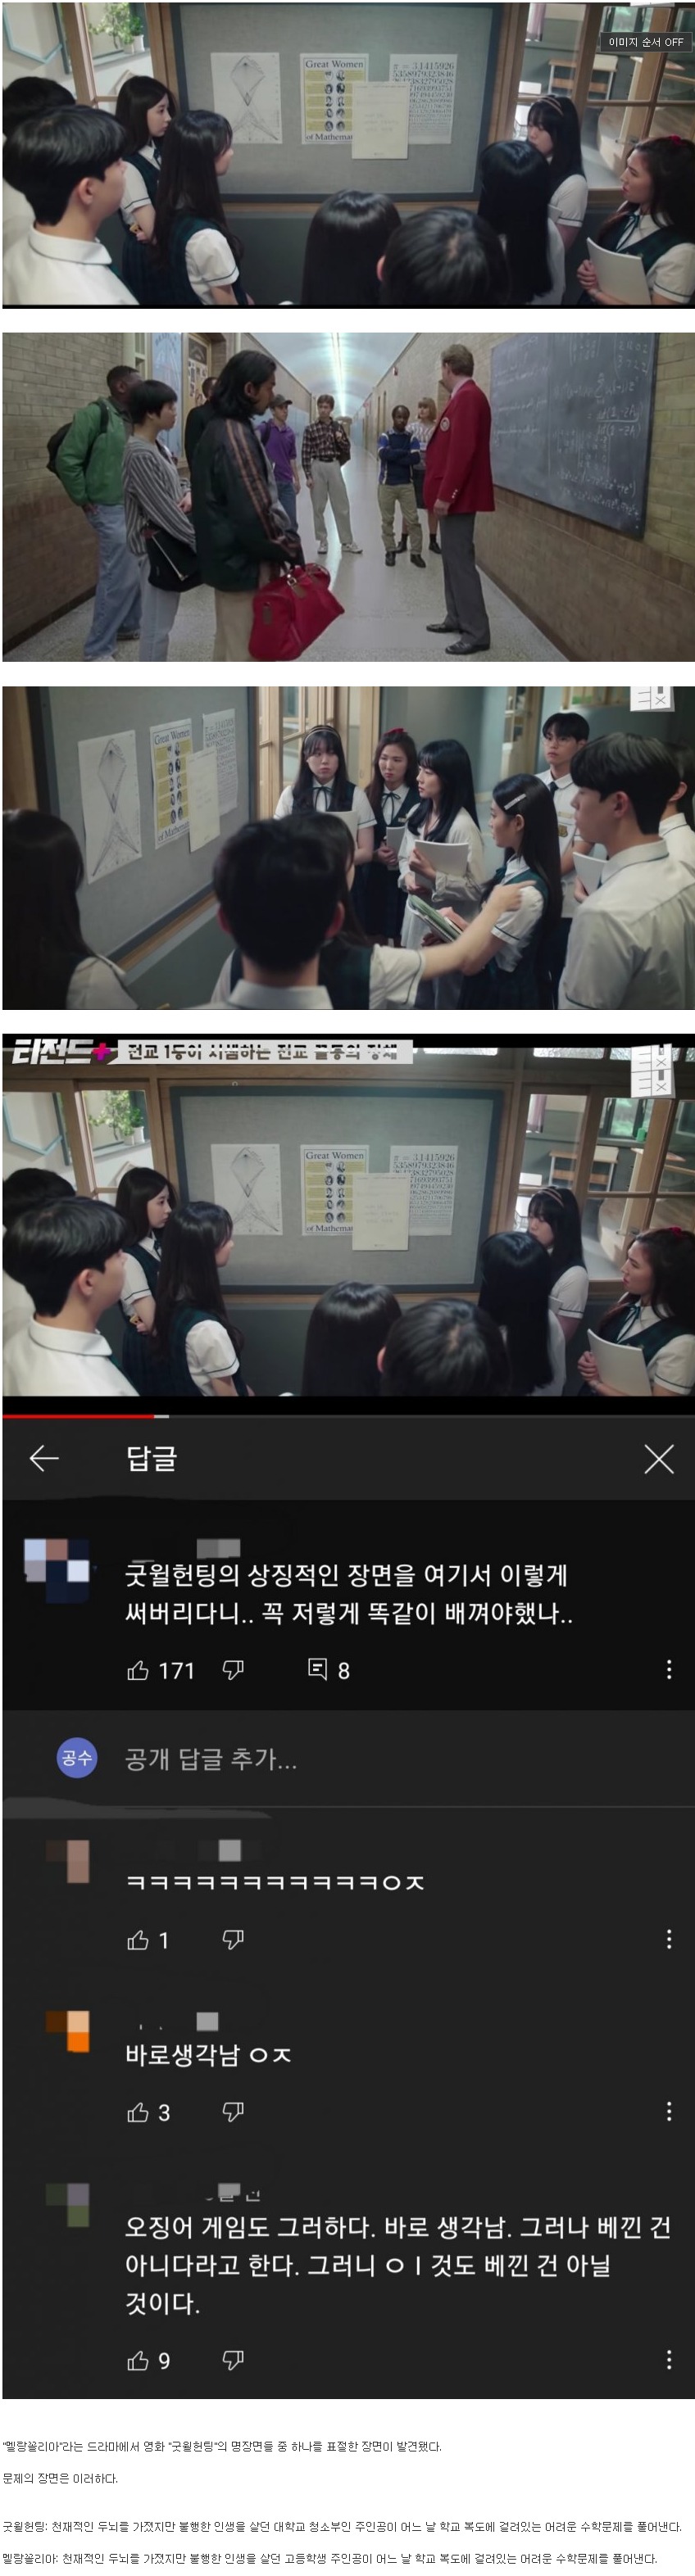 K-드라마 미국영화 표절 논란.jpg